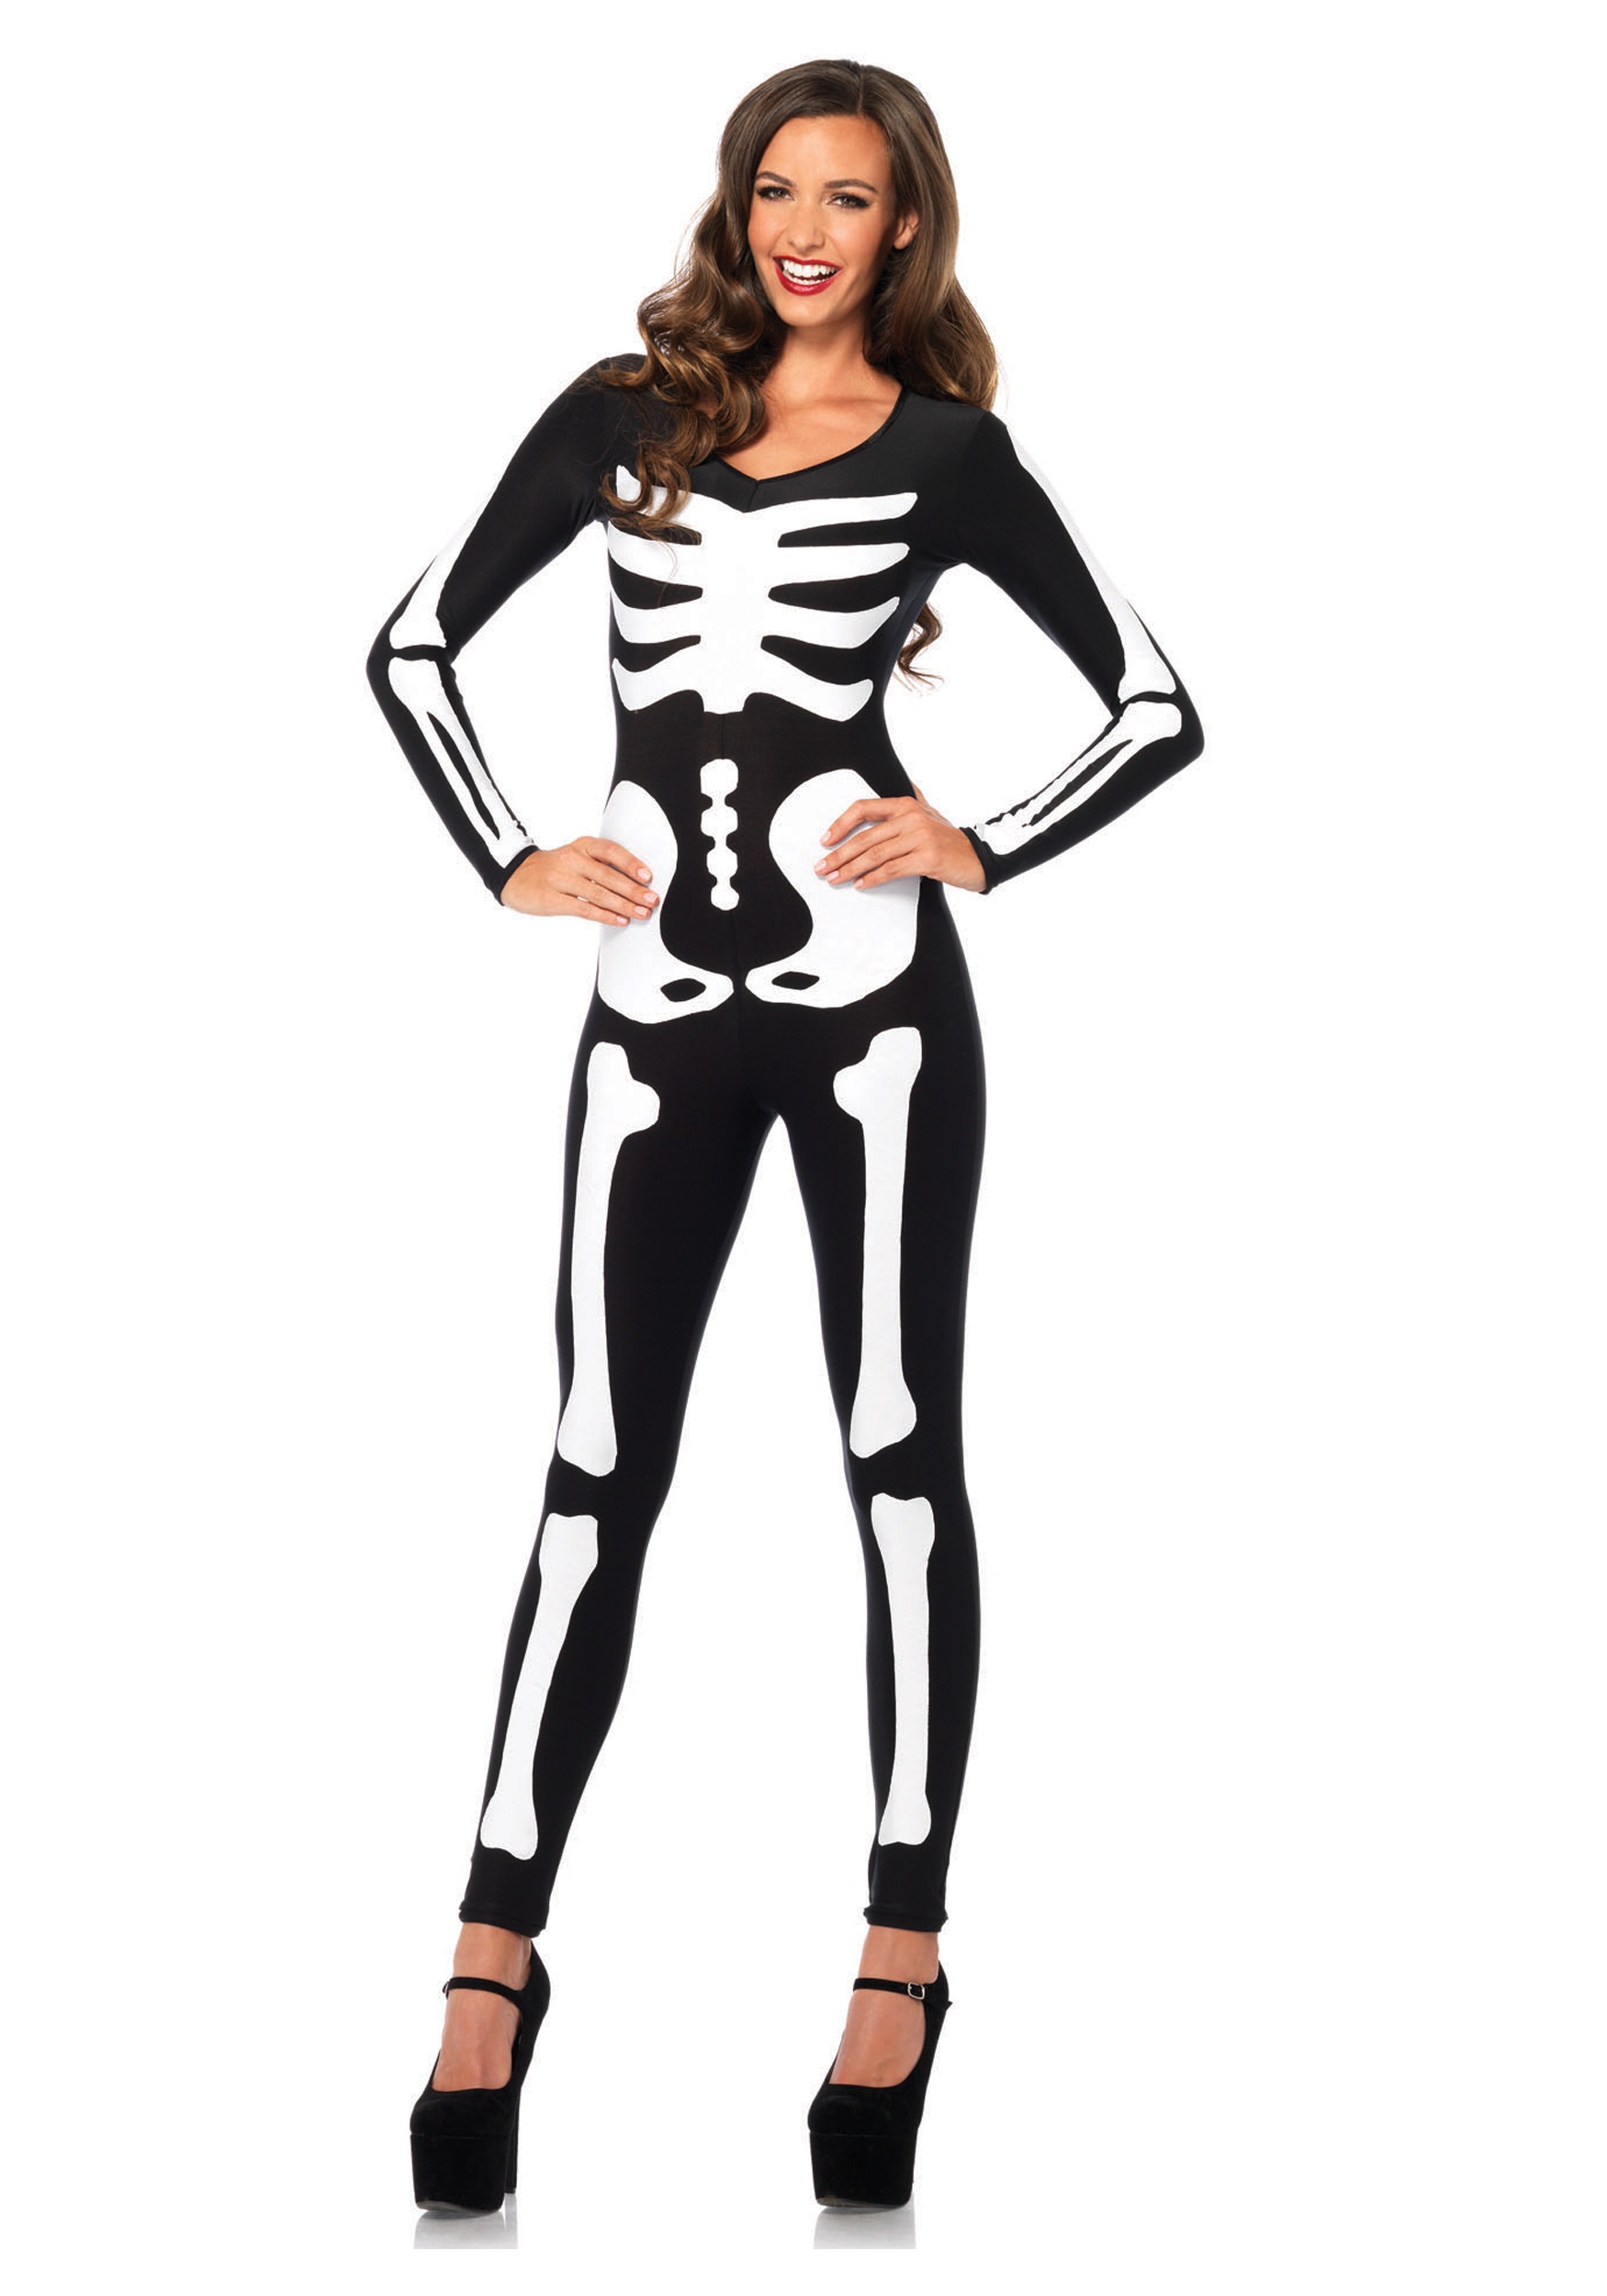 Photos - Fancy Dress MKW Leg Avenue Glow In the Dark Skeleton Catsuit for Women Black/White 